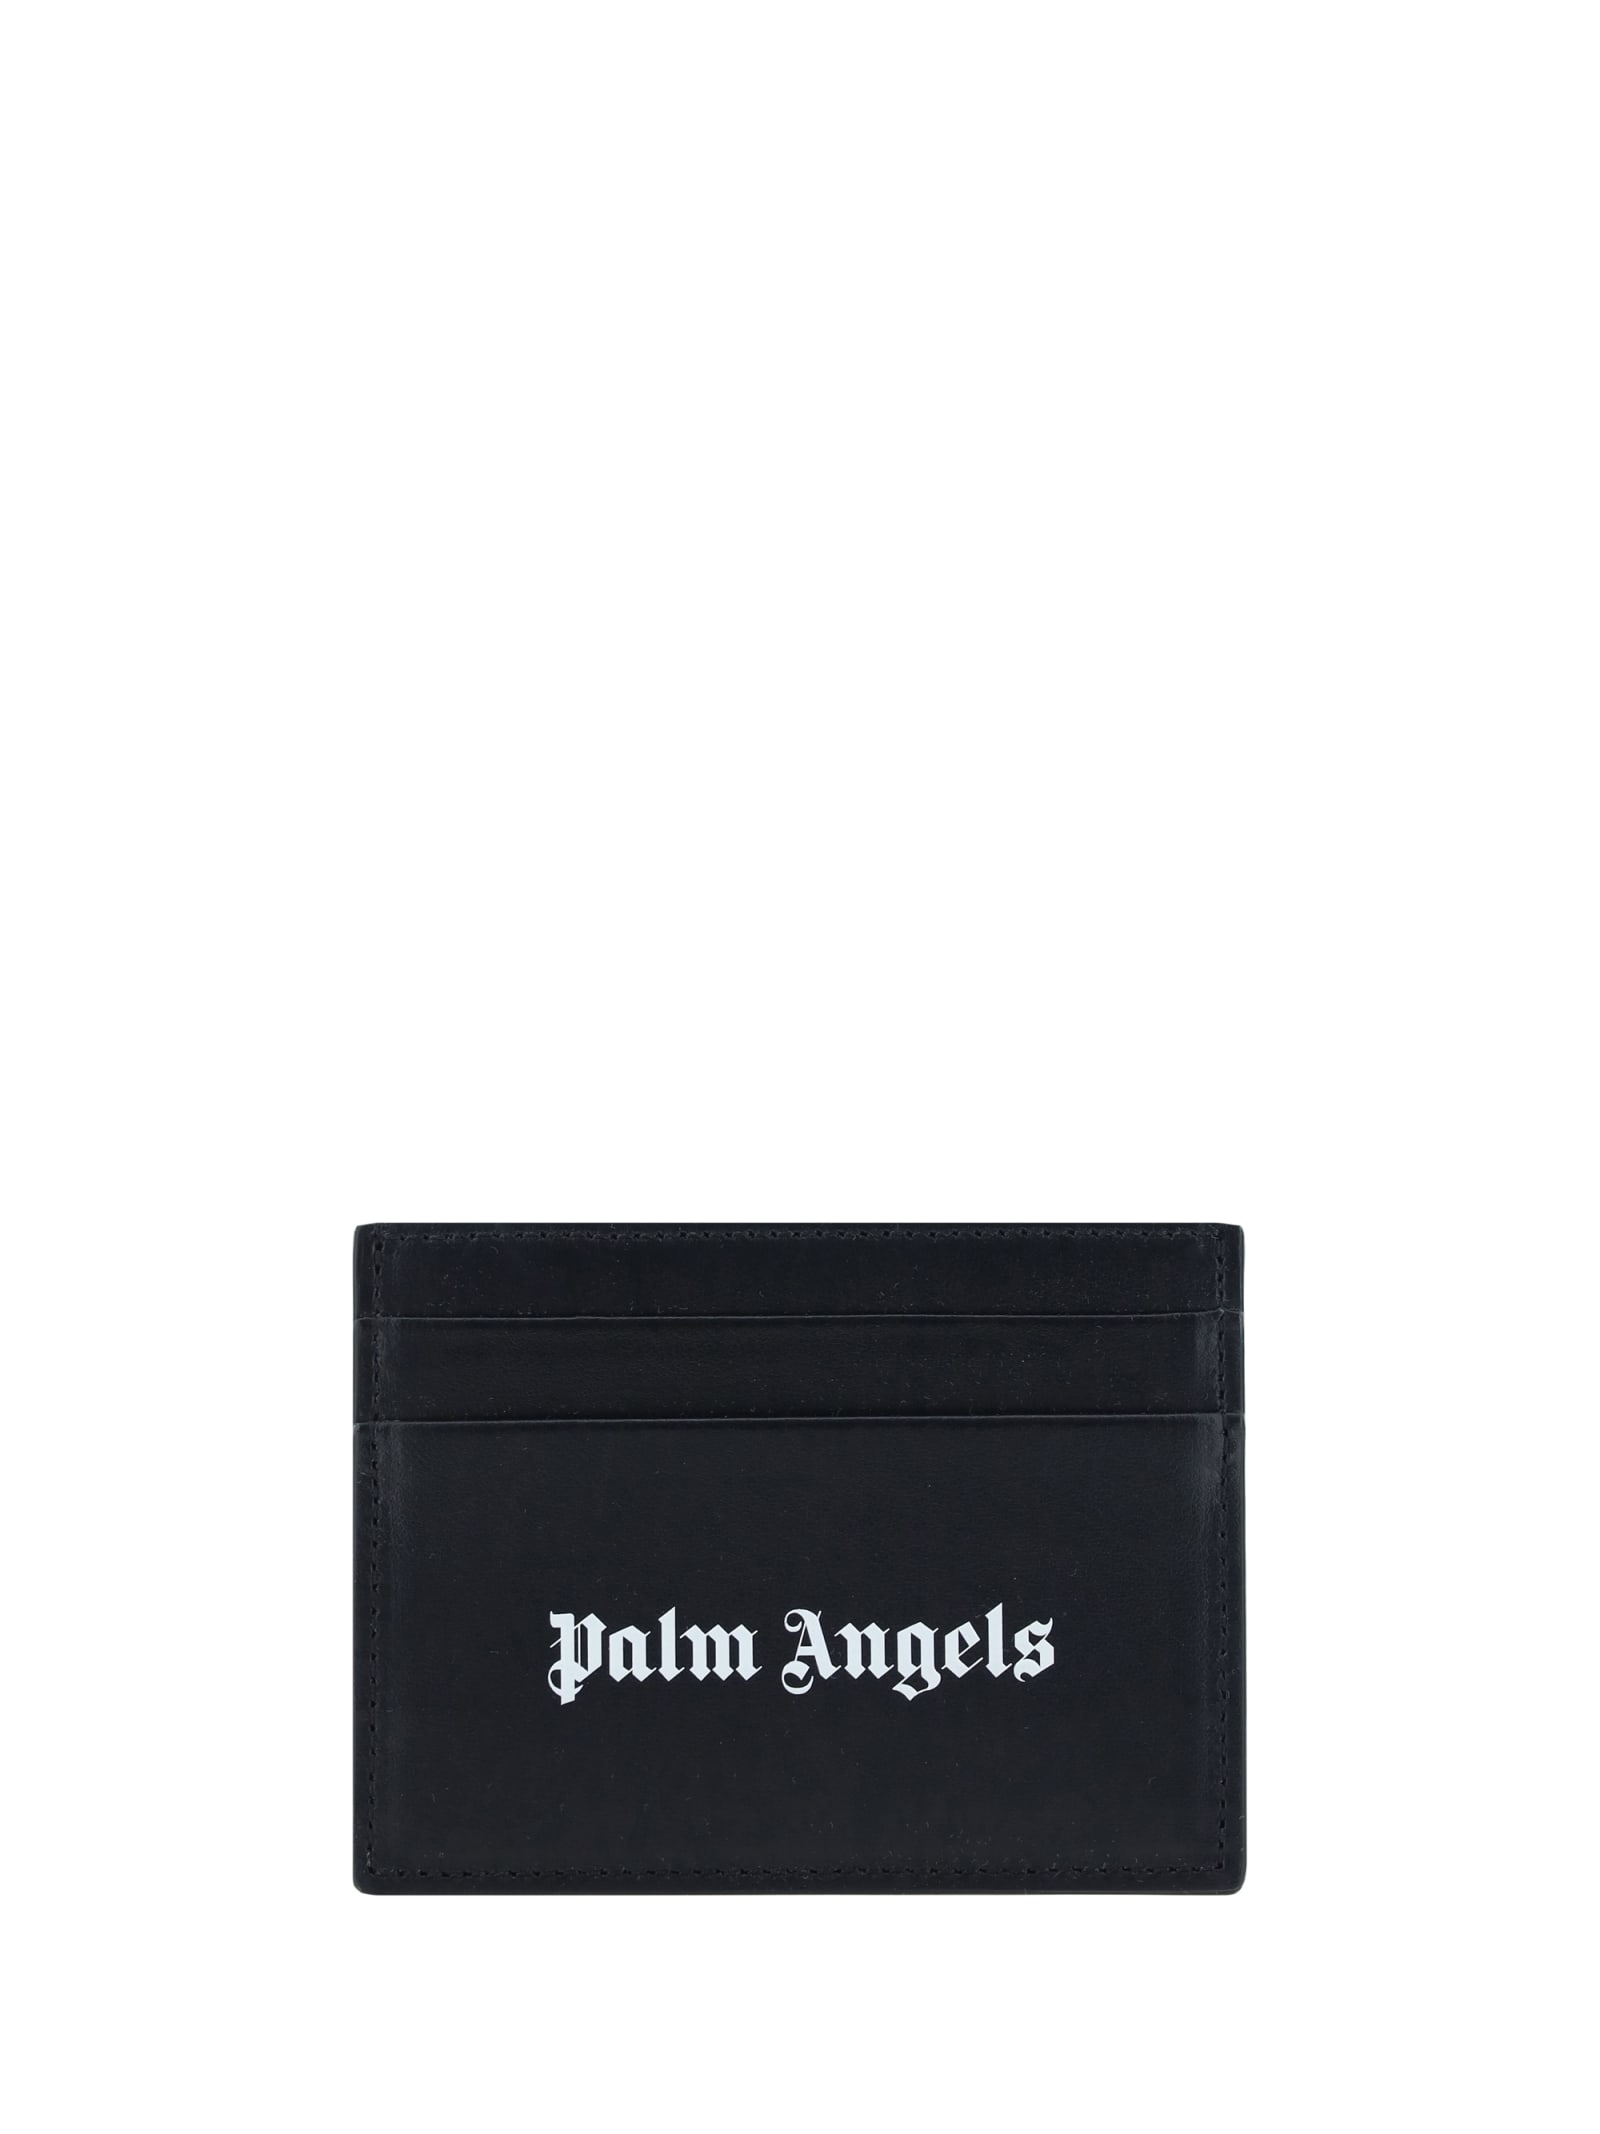 PALM ANGELS BLACK CALF LEATHER CARD HOLDER